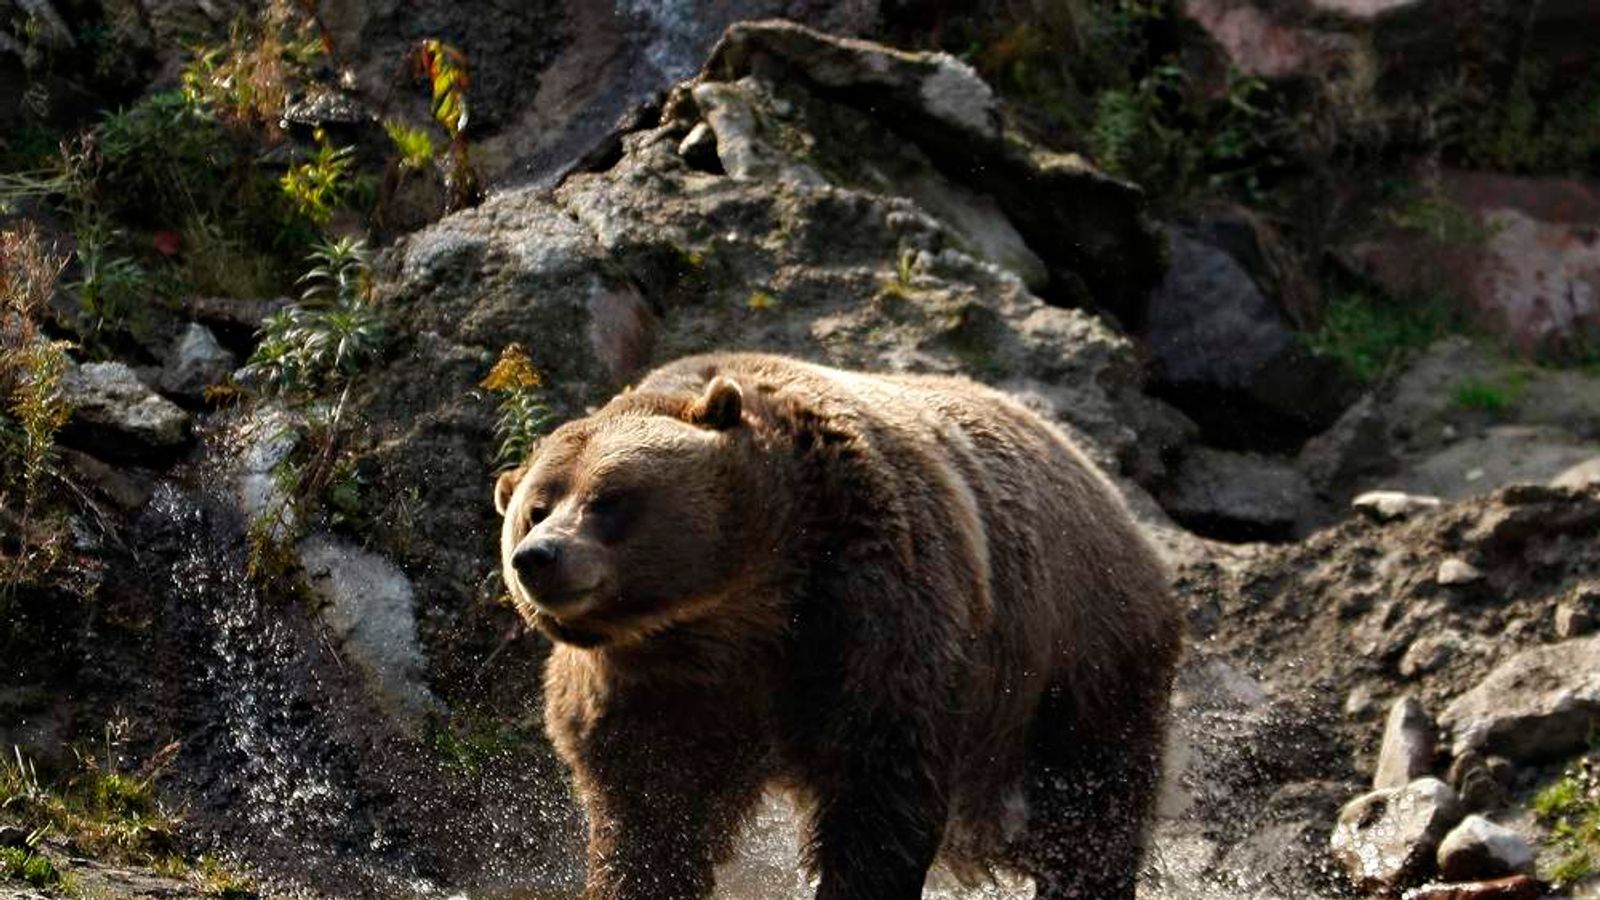 Man Took Photos Of Bear Before He Was Killed | World News | Sky News